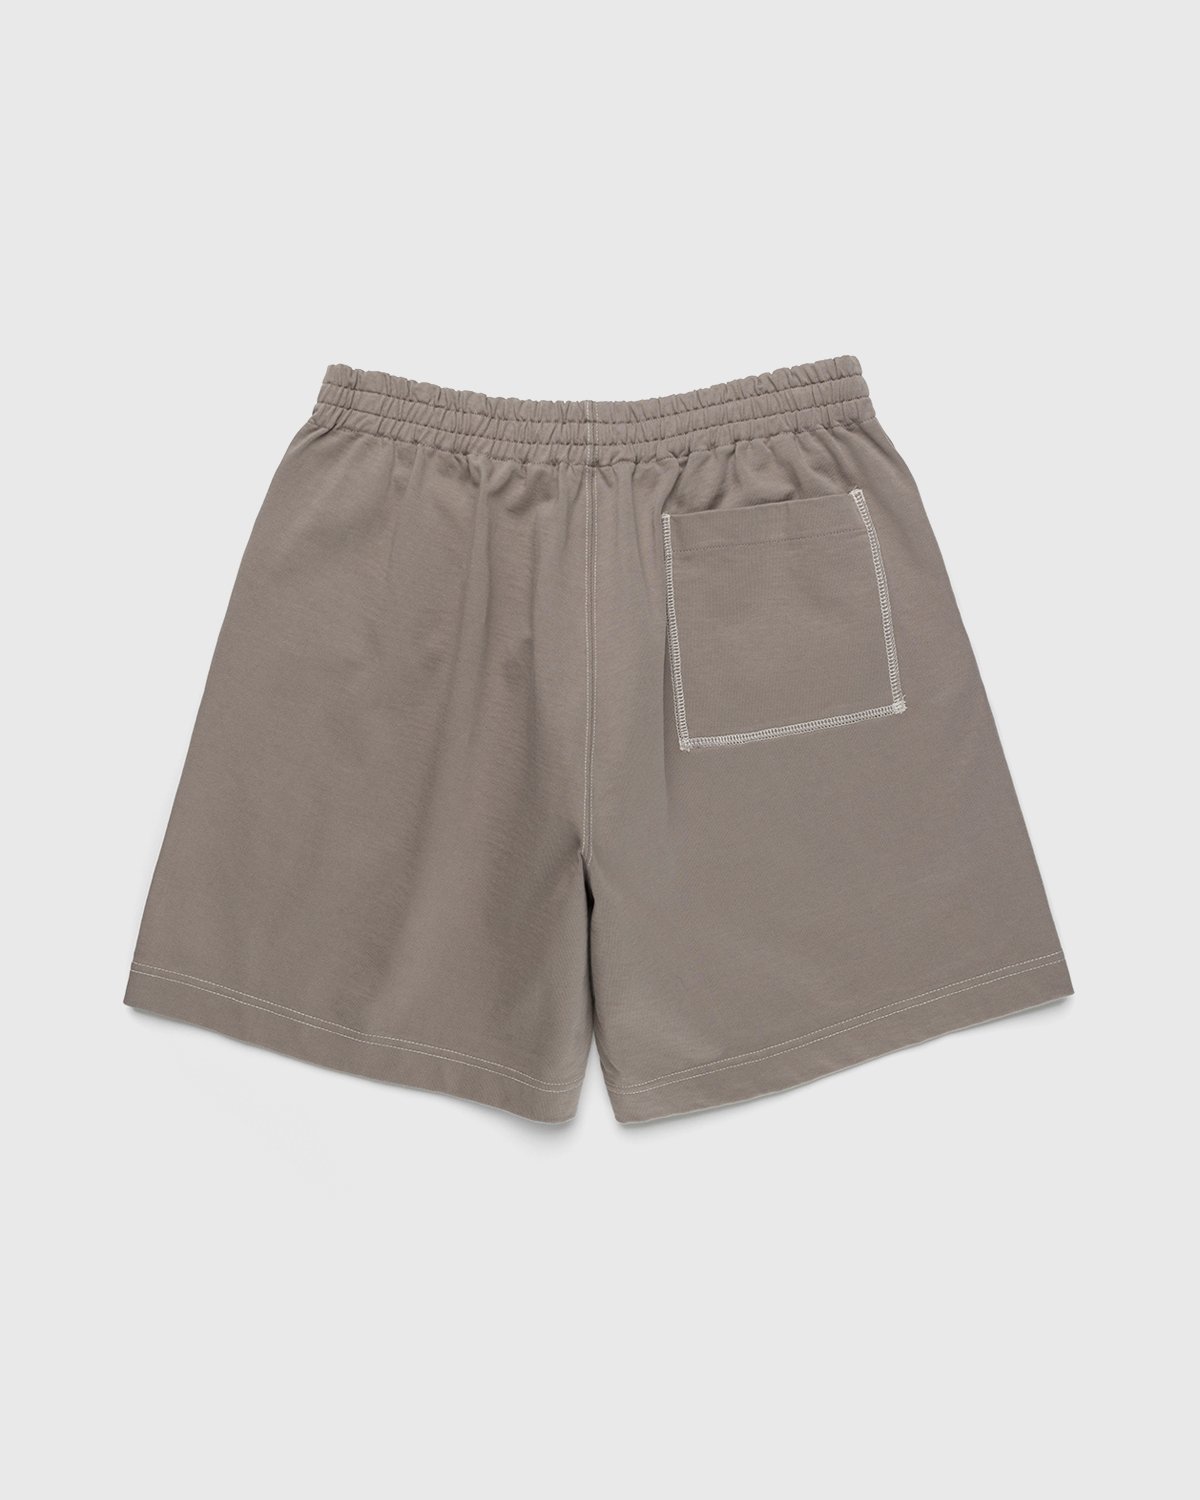 Auralee - High Density Cotton Jersey Shorts Grey Beige - Clothing - Beige - Image 2